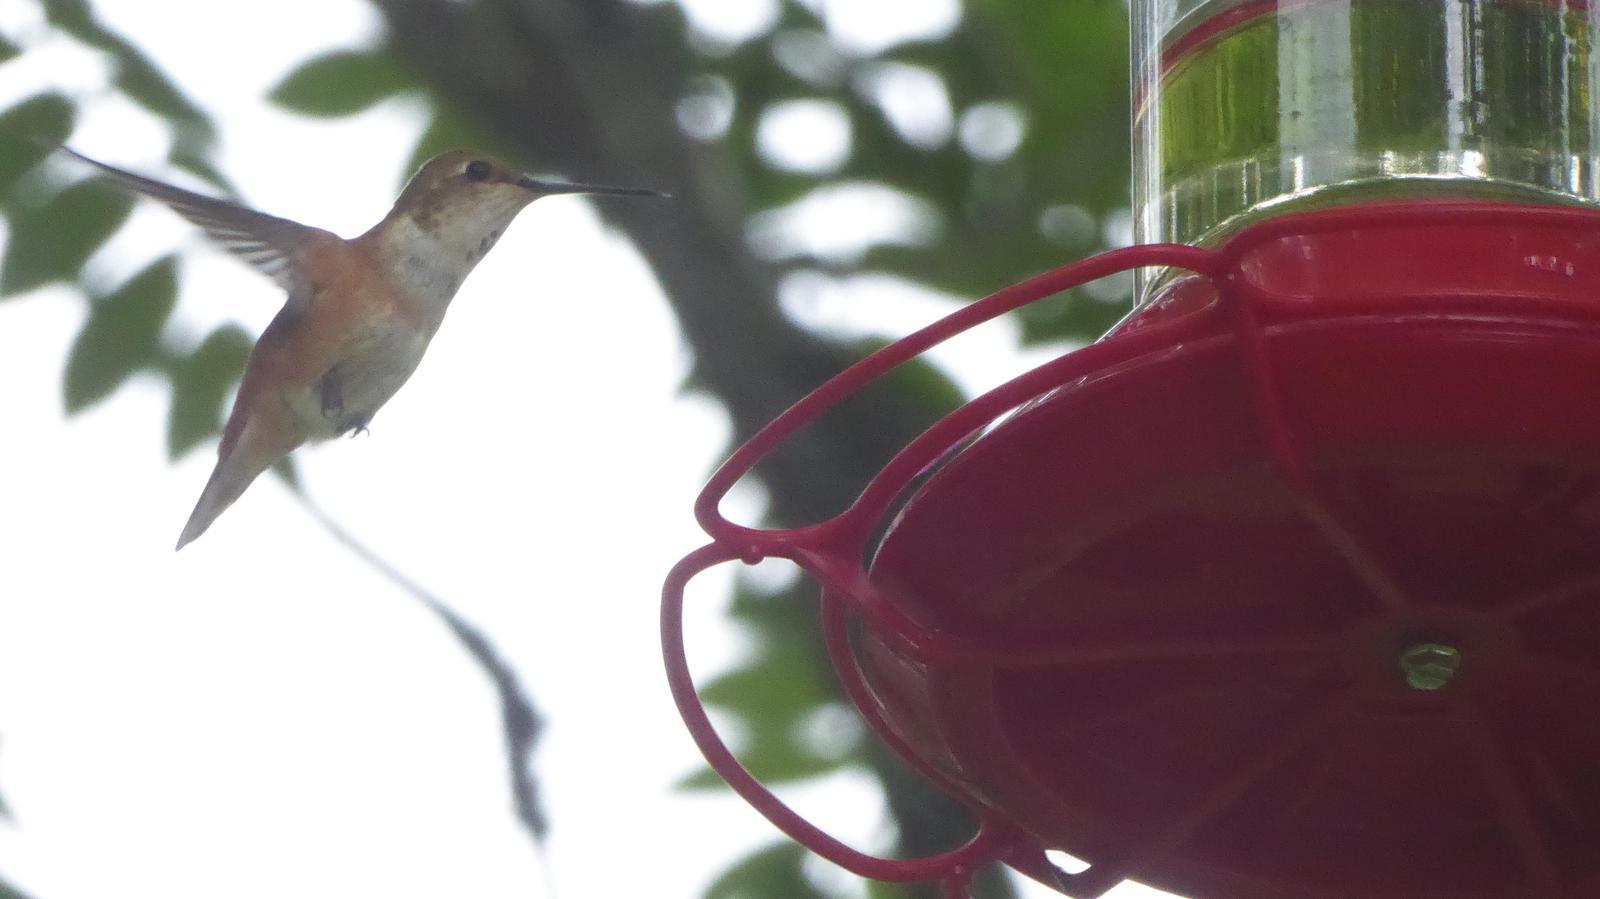 Rufous Hummingbird Photo by Daliel Leite